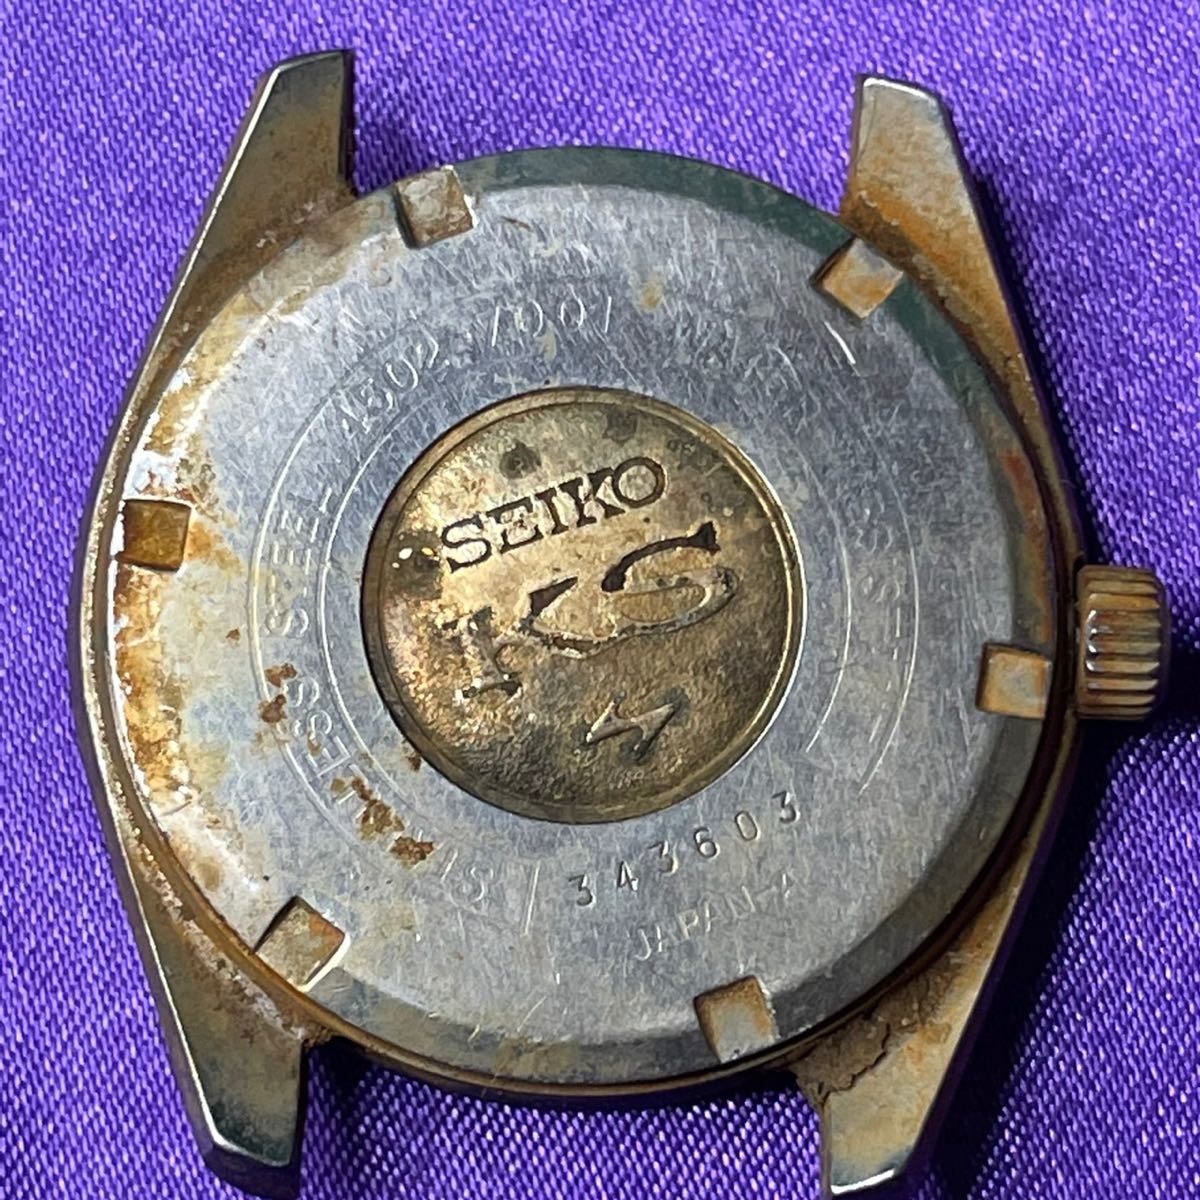 SEIKO セイコー KS HI-BEAT キングセイコー 4502-7001 ハイビート 手巻き メンズ 腕時計 自動巻き? カレンダー 管理TK16_画像2